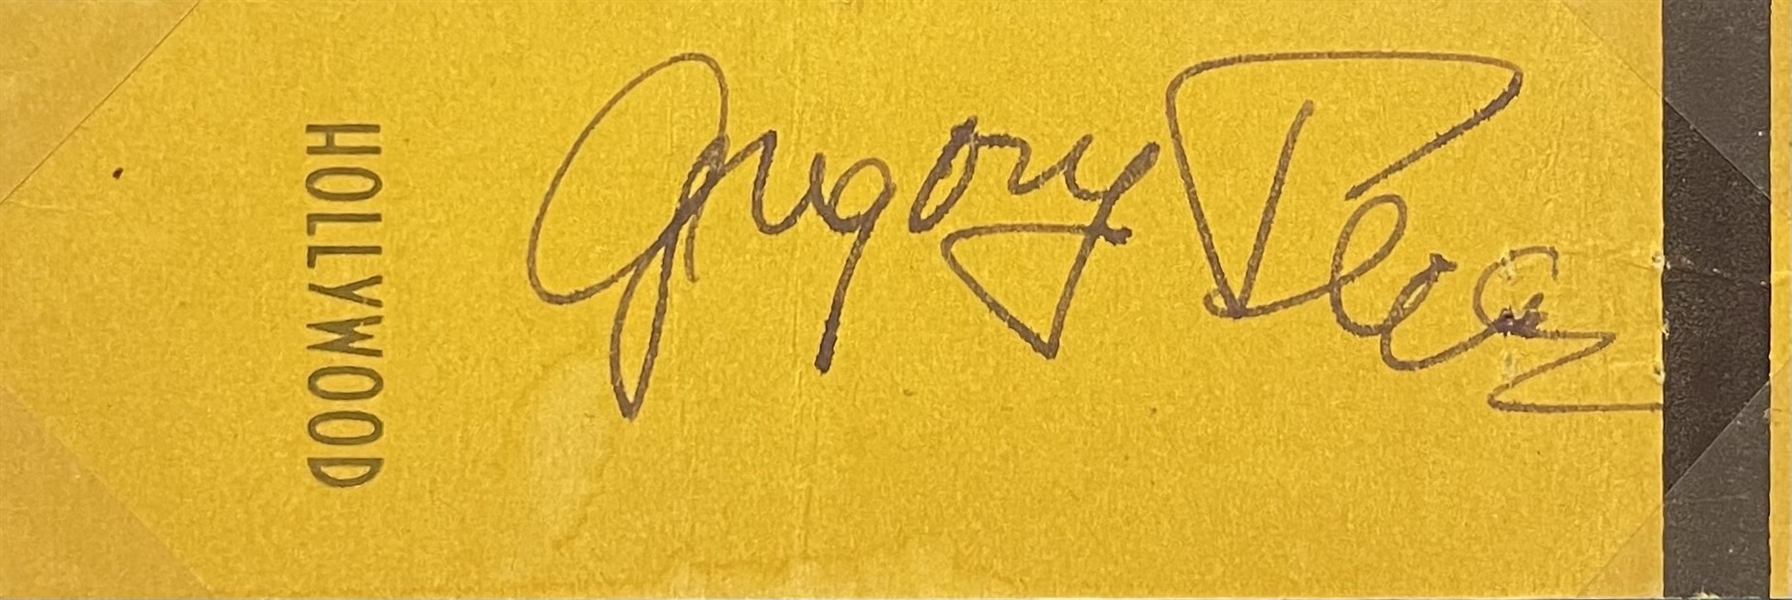 Gregory Peck Signature